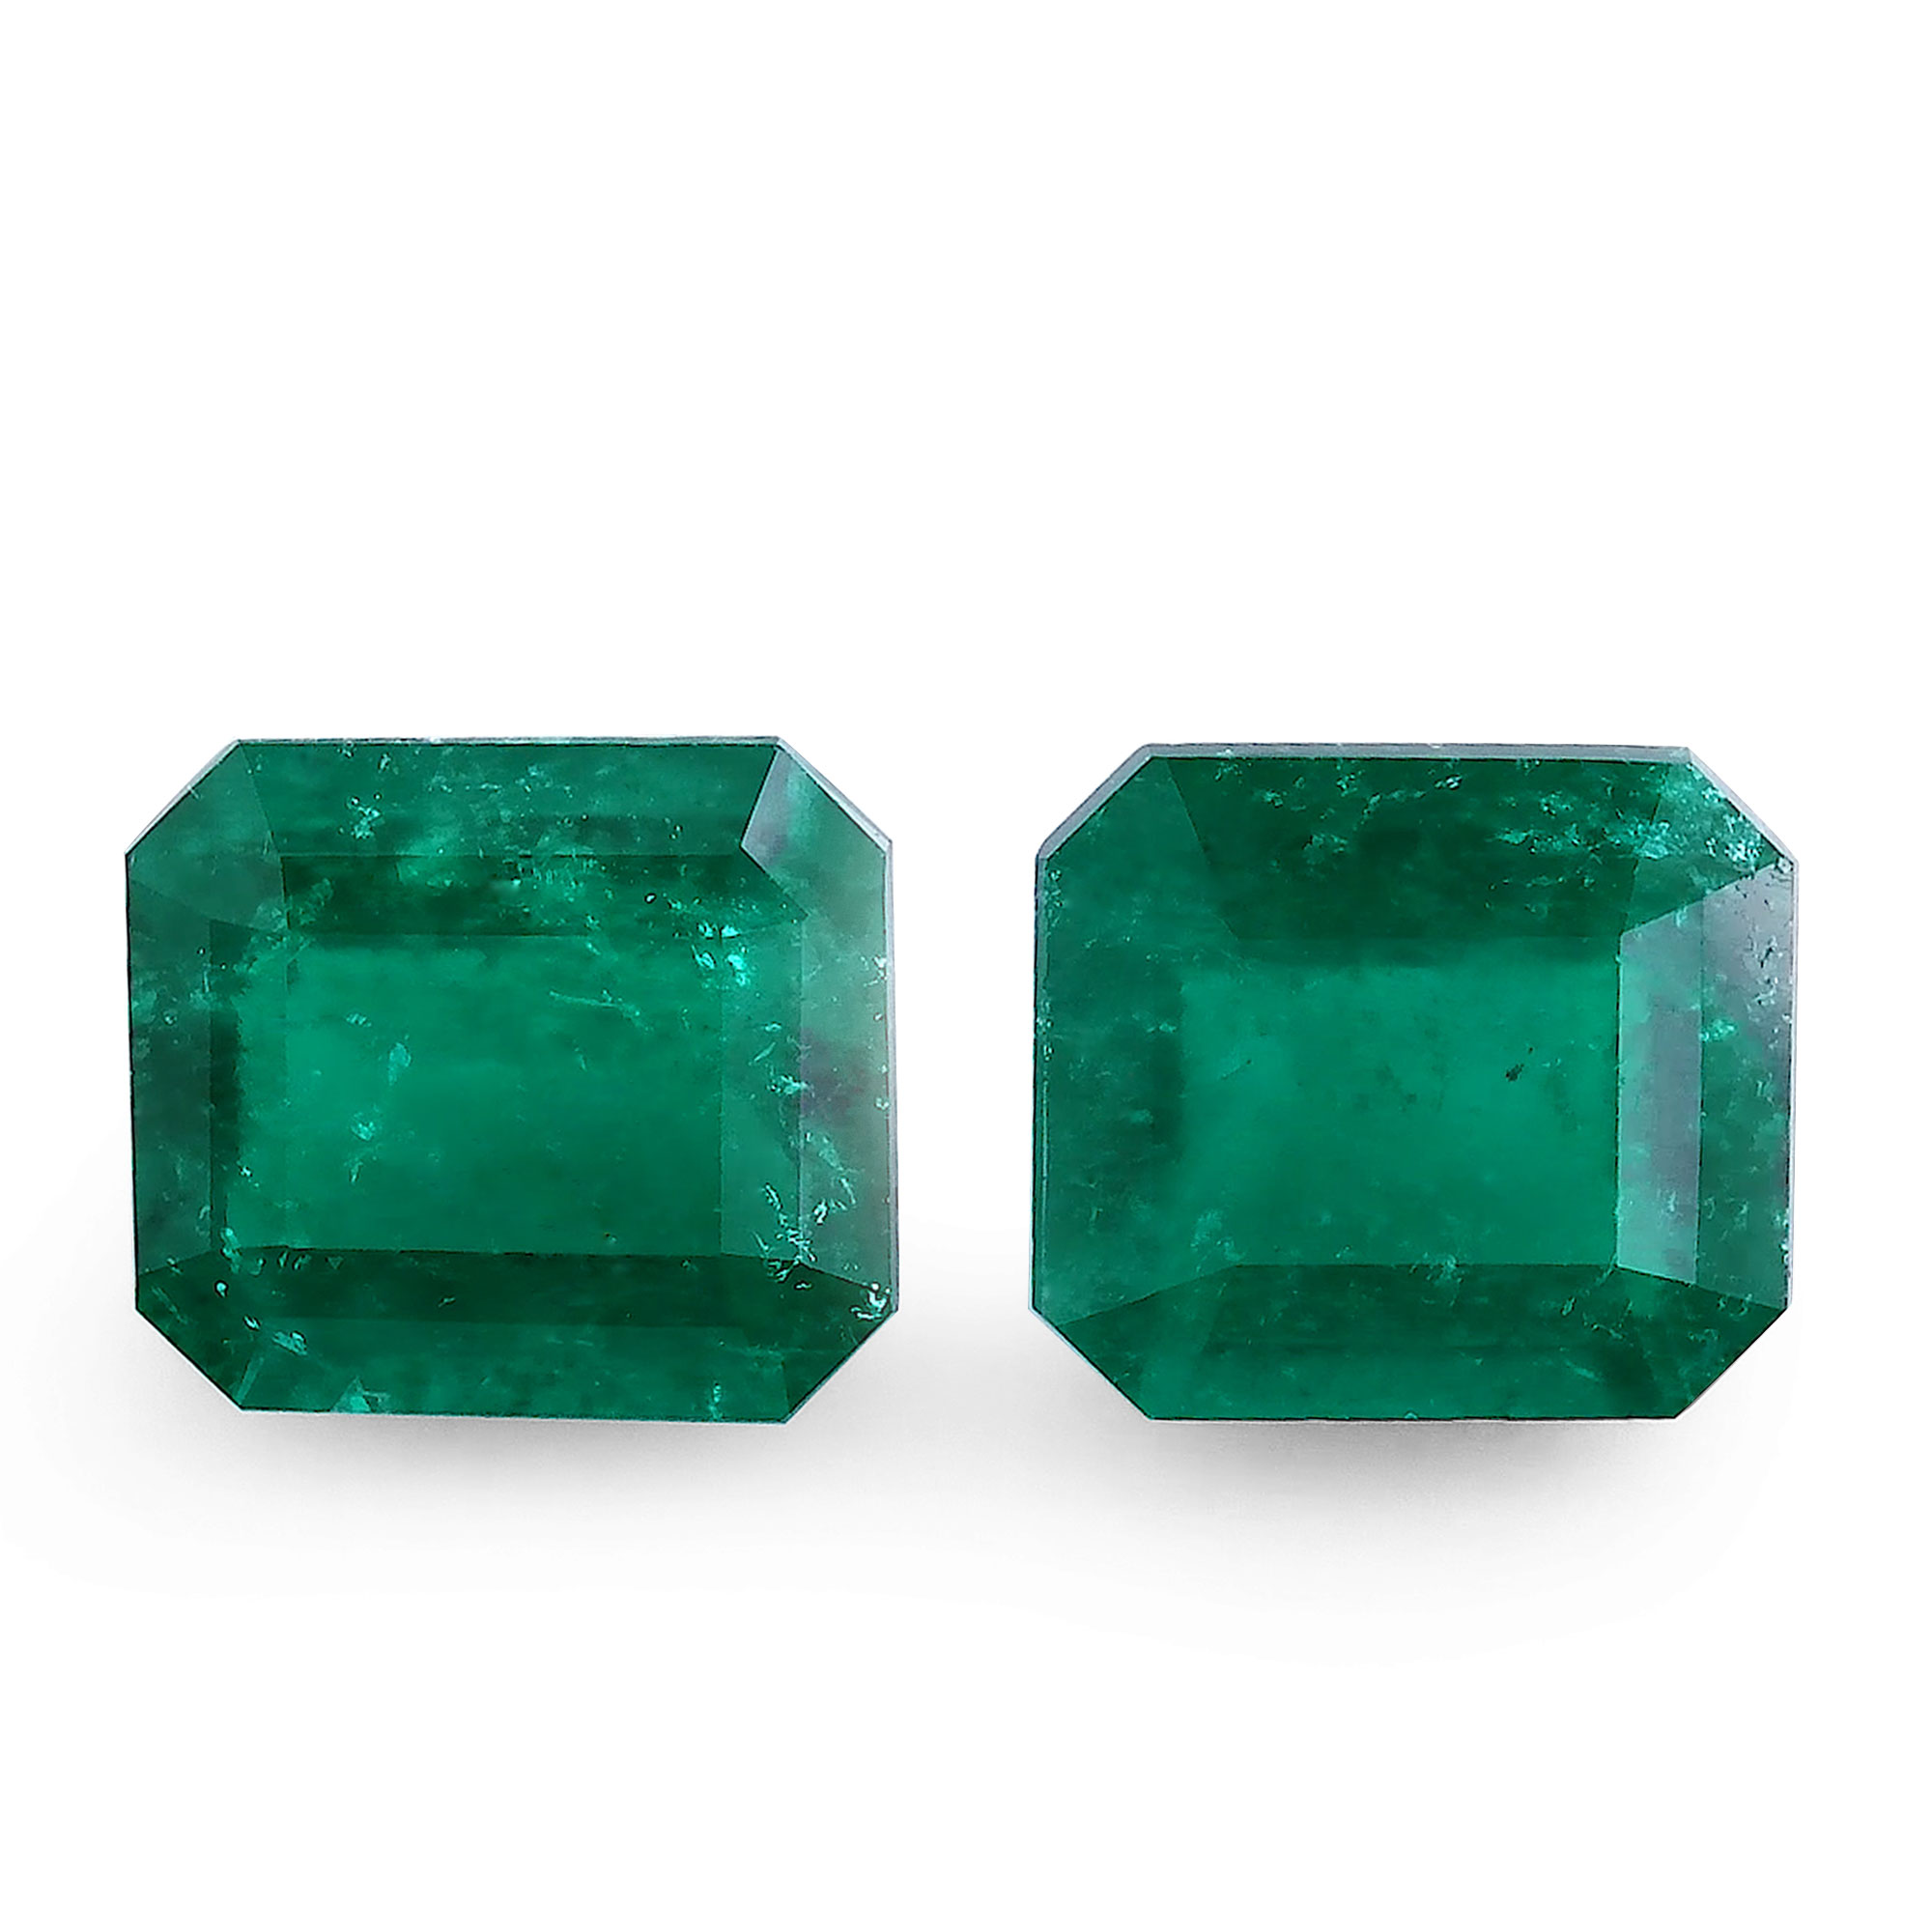 Sparkle & Jade - Gemstone Jewelry, Custom Creations & Gifts